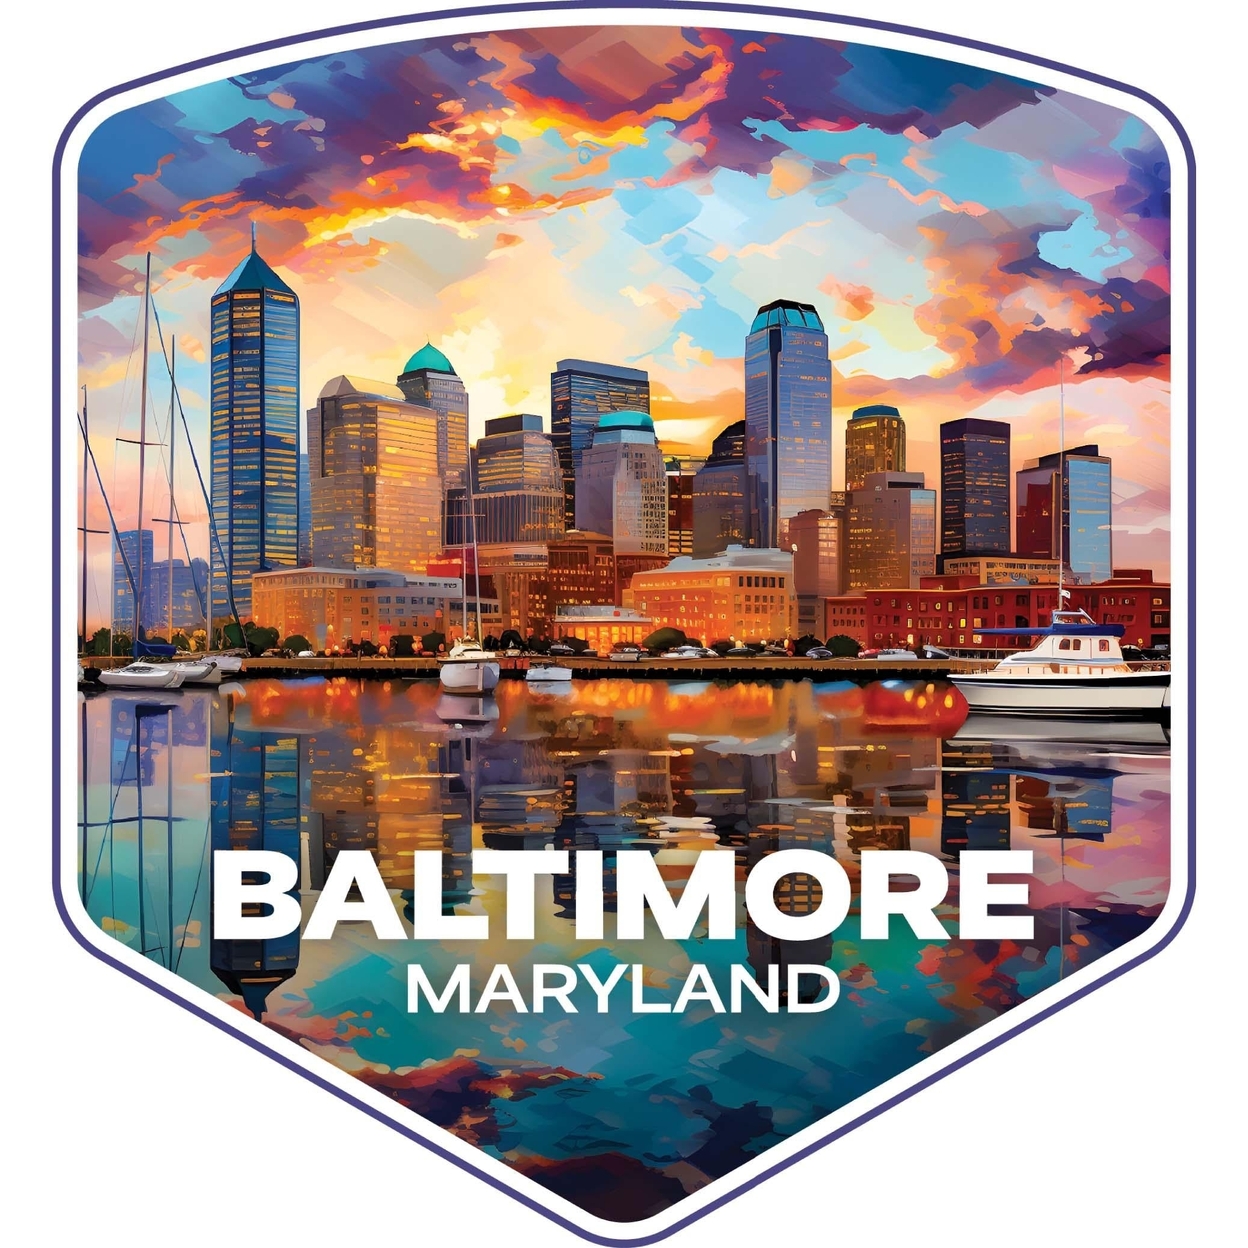 Baltimore Maryland A Souvenir Vinyl Decal Sticker - 6-Inch